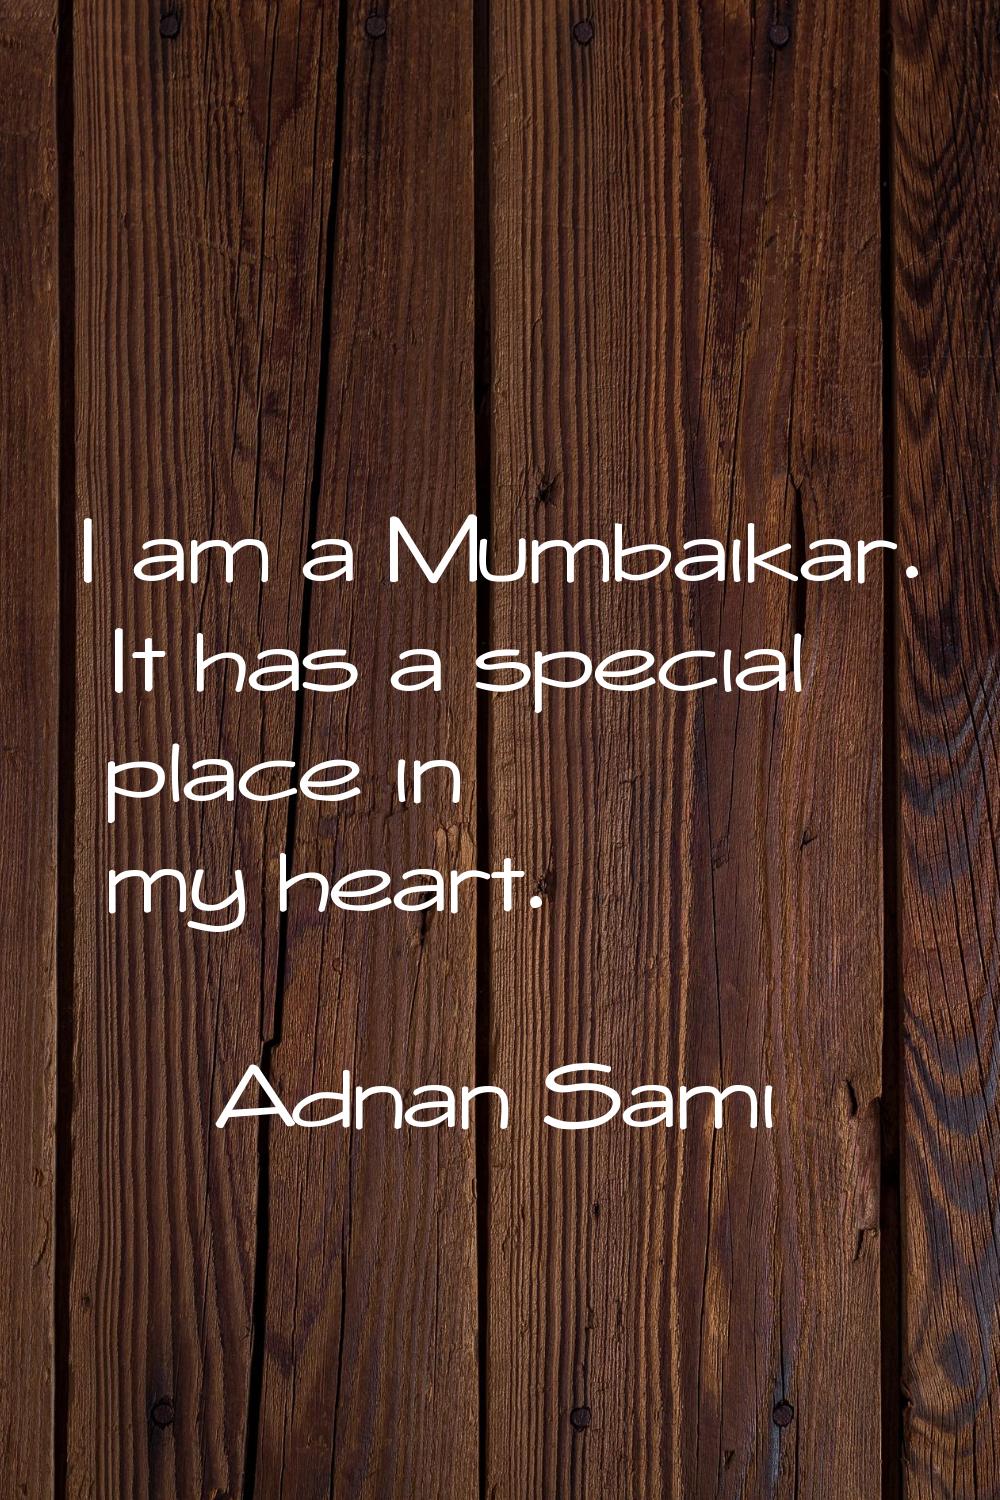 I am a Mumbaikar. It has a special place in my heart.